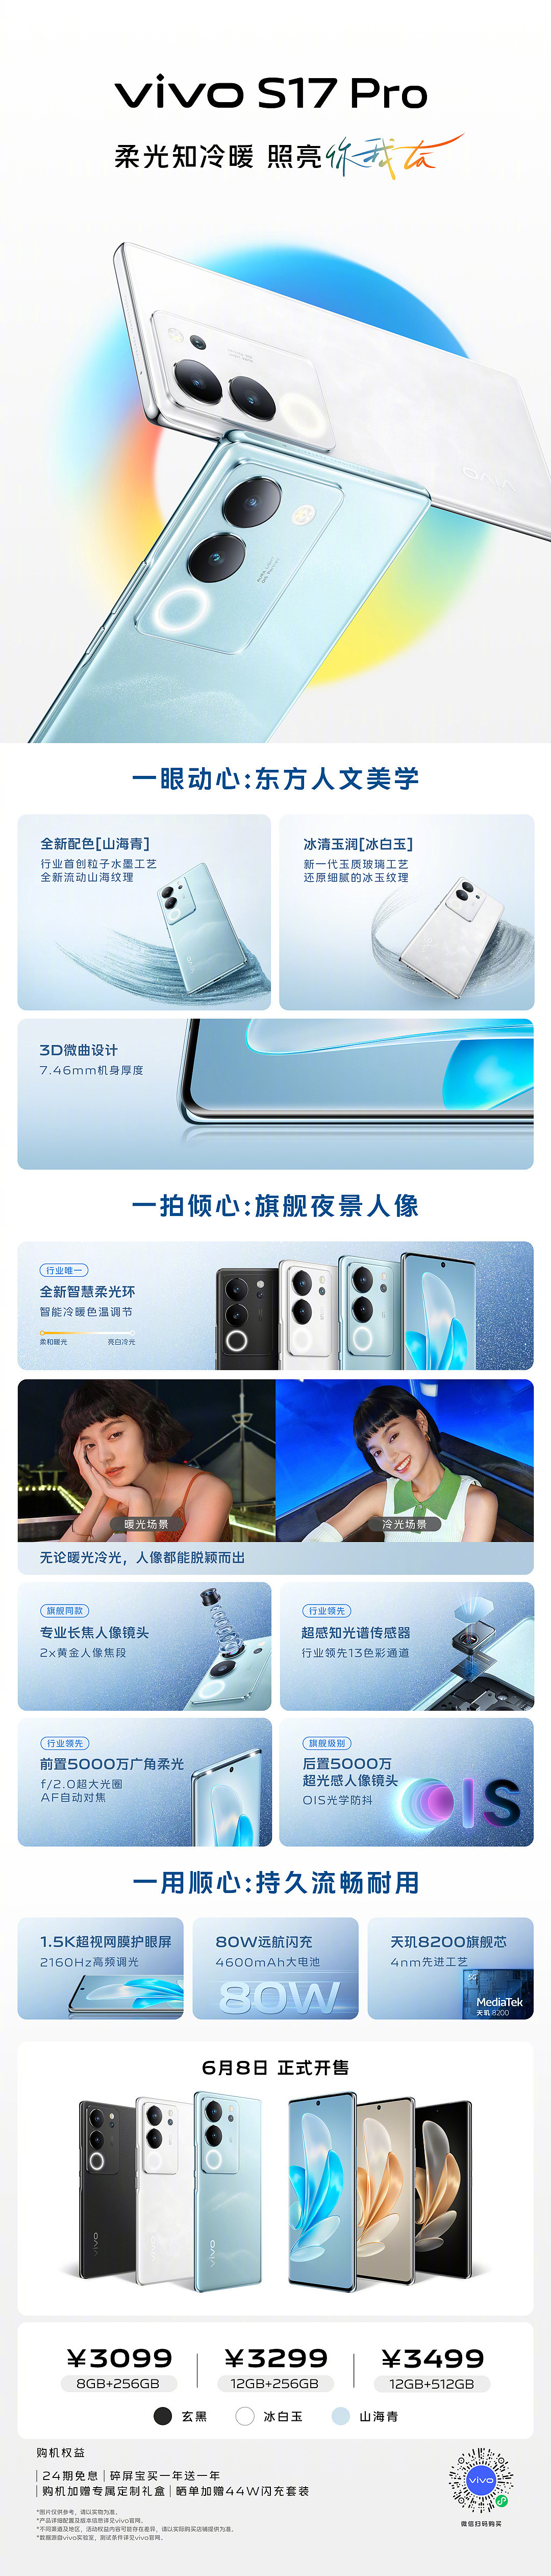 vivo S17 / S17t / S17 Pro 手机发布：主打人像摄影，售价 2499 元起 - 8